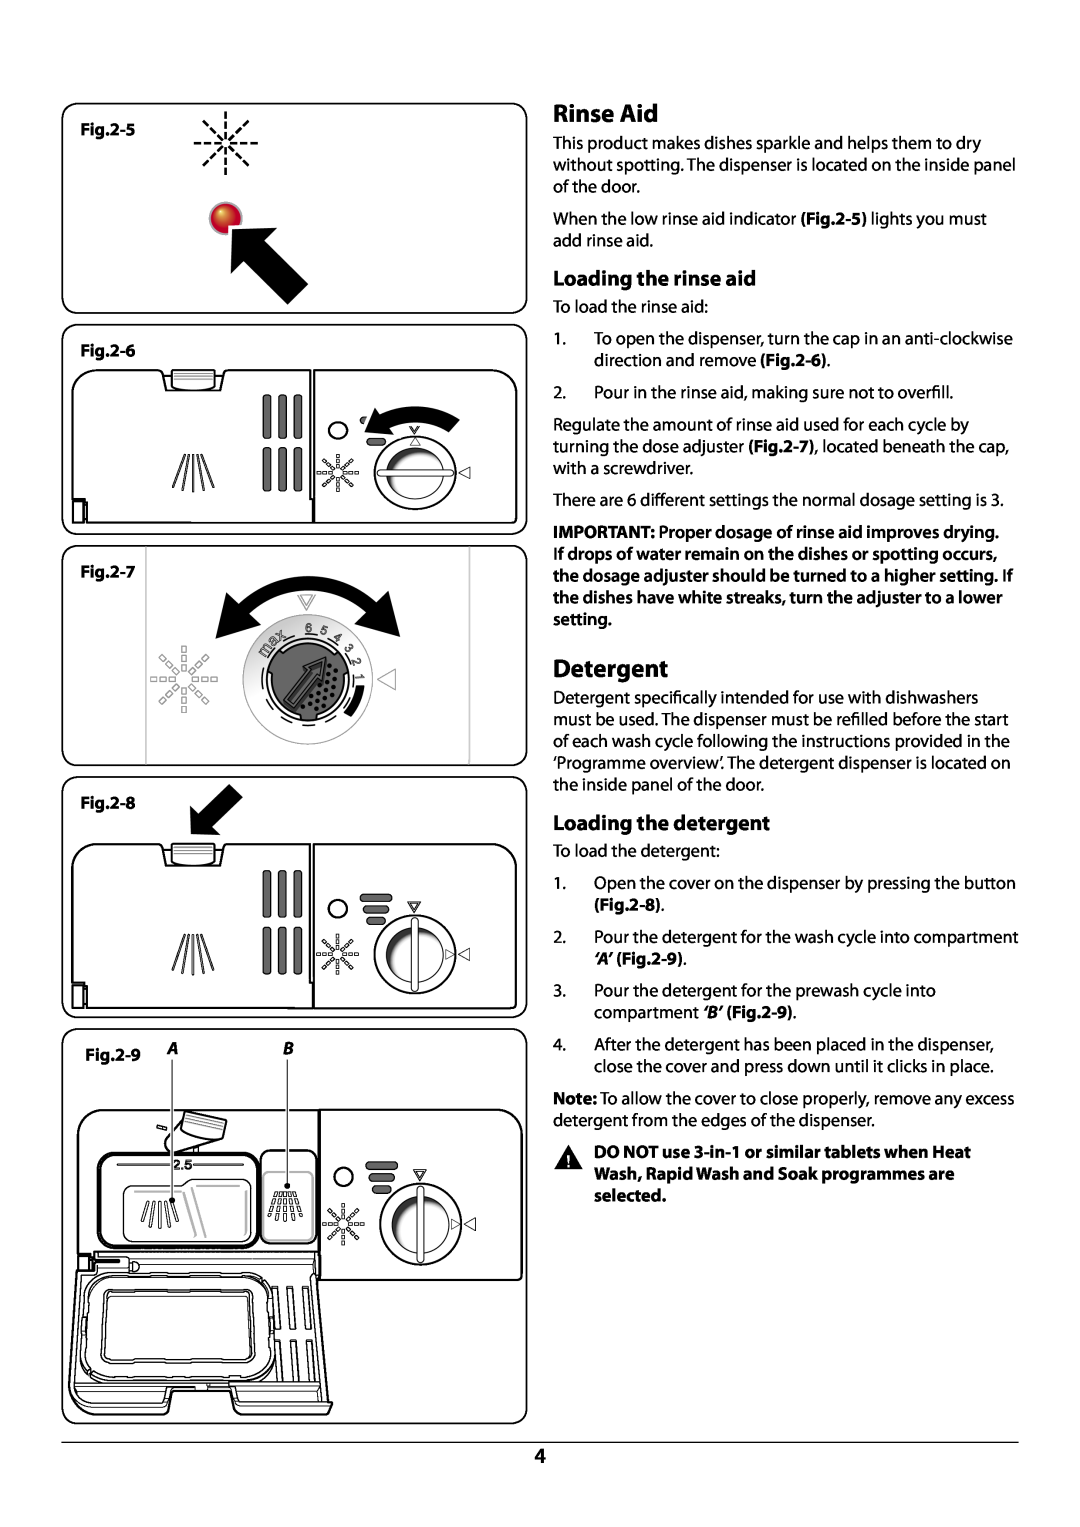 Rangemaster RDW6012FI manual Rinse Aid, Detergent, Loading the rinse aid, Loading the detergent, 5, 7, 8, 9 